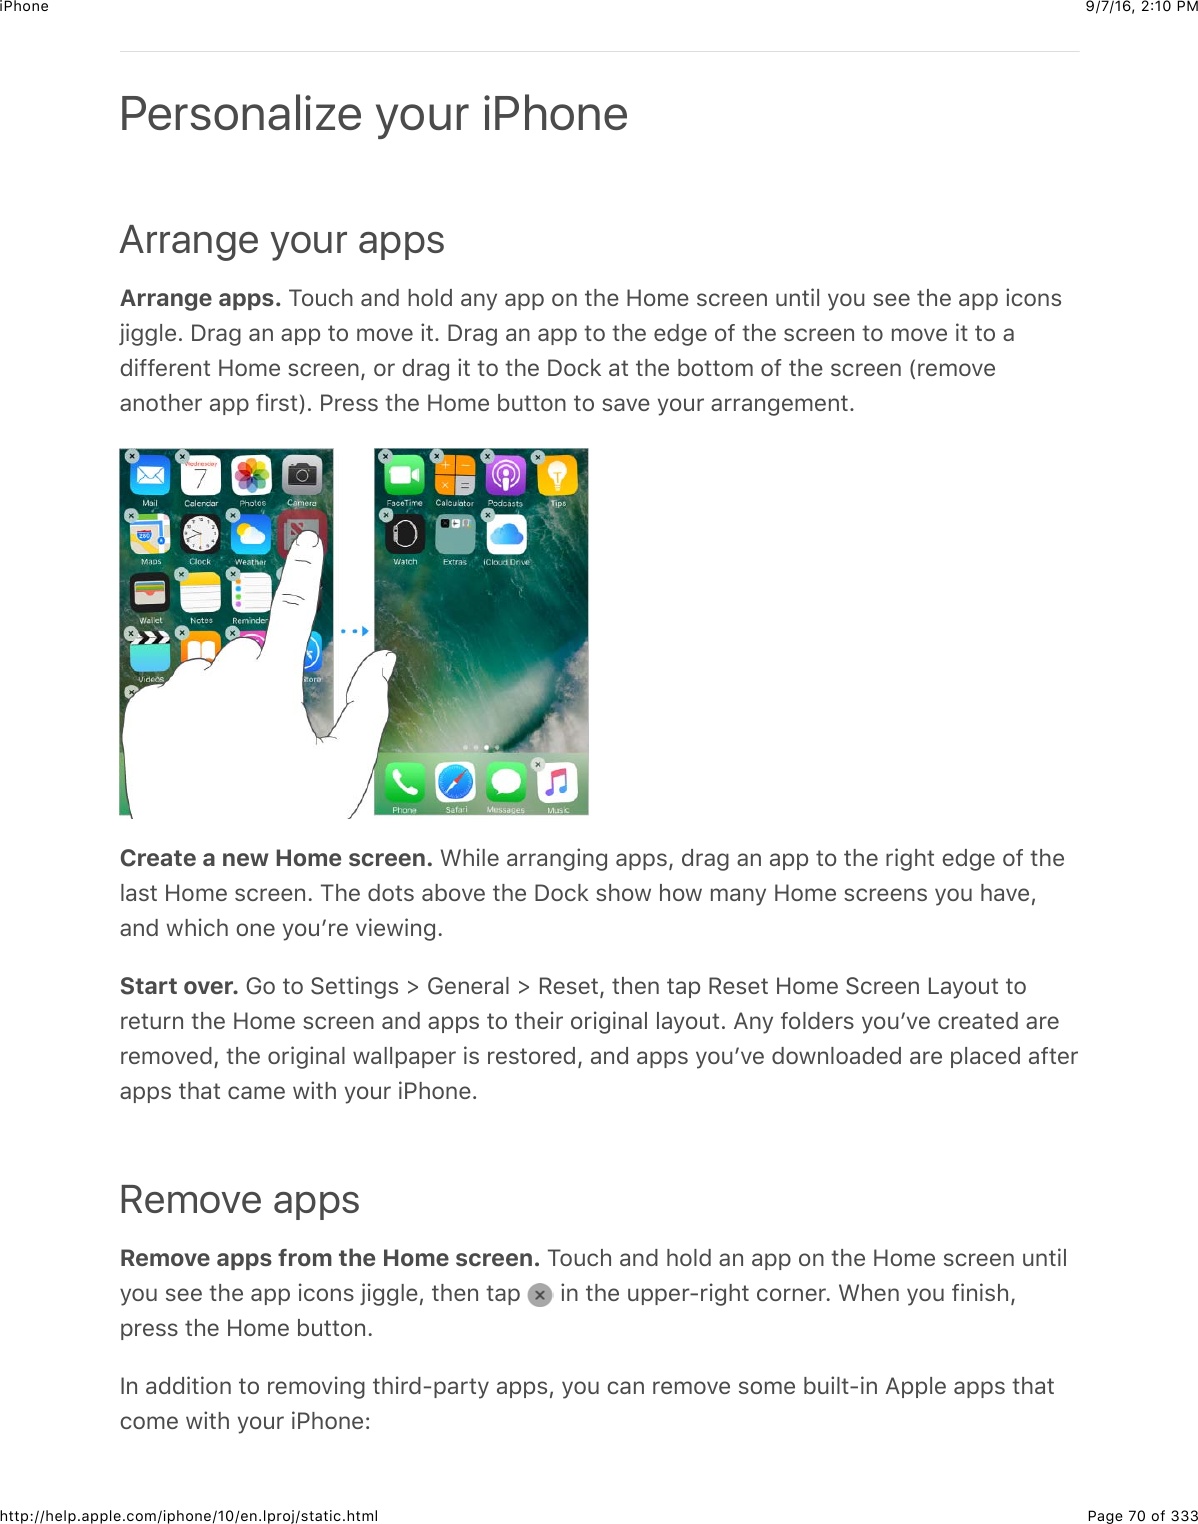 9/7/16, 2)10 PMiPhonePage 70 of 333http://help.apple.com/iphone/10/en.lproj/static.htmlArrange your appsArrange apps. K2:.4$&amp;6($425($&amp;69$&amp;,,$26$#4&quot;$R20&quot;$%.&apos;&quot;&quot;6$:6#+5$92:$%&quot;&quot;$#4&quot;$&amp;,,$+.26%V+335&quot;=$S&apos;&amp;3$&amp;6$&amp;,,$#2$027&quot;$+#=$S&apos;&amp;3$&amp;6$&amp;,,$#2$#4&quot;$&quot;(3&quot;$2-$#4&quot;$%.&apos;&quot;&quot;6$#2$027&quot;$+#$#2$&amp;(+--&quot;&apos;&quot;6#$R20&quot;$%.&apos;&quot;&quot;6J$2&apos;$(&apos;&amp;3$+#$#2$#4&quot;$S2.*$&amp;#$#4&quot;$12##20$2-$#4&quot;$%.&apos;&quot;&quot;6$`&apos;&quot;027&quot;&amp;62#4&quot;&apos;$&amp;,,$-+&apos;%#a=$G&apos;&quot;%%$#4&quot;$R20&quot;$1:##26$#2$%&amp;7&quot;$92:&apos;$&amp;&apos;&apos;&amp;63&quot;0&quot;6#=Create a new Home screen. A4+5&quot;$&amp;&apos;&apos;&amp;63+63$&amp;,,%J$(&apos;&amp;3$&amp;6$&amp;,,$#2$#4&quot;$&apos;+34#$&quot;(3&quot;$2-$#4&quot;5&amp;%#$R20&quot;$%.&apos;&quot;&quot;6=$K4&quot;$(2#%$&amp;127&quot;$#4&quot;$S2.*$%42@$42@$0&amp;69$R20&quot;$%.&apos;&quot;&quot;6%$92:$4&amp;7&quot;J&amp;6($@4+.4$26&quot;$92:B&apos;&quot;$7+&quot;@+63=Start over. !2$#2$&gt;&quot;##+63%$]$!&quot;6&quot;&apos;&amp;5$]$/&quot;%&quot;#J$#4&quot;6$#&amp;,$/&quot;%&quot;#$R20&quot;$&gt;.&apos;&quot;&quot;6$Q&amp;92:#$#2&apos;&quot;#:&apos;6$#4&quot;$R20&quot;$%.&apos;&quot;&quot;6$&amp;6($&amp;,,%$#2$#4&quot;+&apos;$2&apos;+3+6&amp;5$5&amp;92:#=$I69$-25(&quot;&apos;%$92:B7&quot;$.&apos;&quot;&amp;#&quot;($&amp;&apos;&quot;&apos;&quot;027&quot;(J$#4&quot;$2&apos;+3+6&amp;5$@&amp;55,&amp;,&quot;&apos;$+%$&apos;&quot;%#2&apos;&quot;(J$&amp;6($&amp;,,%$92:B7&quot;$(2@652&amp;(&quot;($&amp;&apos;&quot;$,5&amp;.&quot;($&amp;-#&quot;&apos;&amp;,,%$#4&amp;#$.&amp;0&quot;$@+#4$92:&apos;$+G426&quot;=Remove appsRemove apps from the Home screen. K2:.4$&amp;6($425($&amp;6$&amp;,,$26$#4&quot;$R20&quot;$%.&apos;&quot;&quot;6$:6#+592:$%&quot;&quot;$#4&quot;$&amp;,,$+.26%$V+335&quot;J$#4&quot;6$#&amp;,$ $+6$#4&quot;$:,,&quot;&apos;U&apos;+34#$.2&apos;6&quot;&apos;=$A4&quot;6$92:$-+6+%4J,&apos;&quot;%%$#4&quot;$R20&quot;$1:##26=P6$&amp;((+#+26$#2$&apos;&quot;027+63$#4+&apos;(U,&amp;&apos;#9$&amp;,,%J$92:$.&amp;6$&apos;&quot;027&quot;$%20&quot;$1:+5#U+6$I,,5&quot;$&amp;,,%$#4&amp;#.20&quot;$@+#4$92:&apos;$+G426&quot;LPersonalize your iPhone